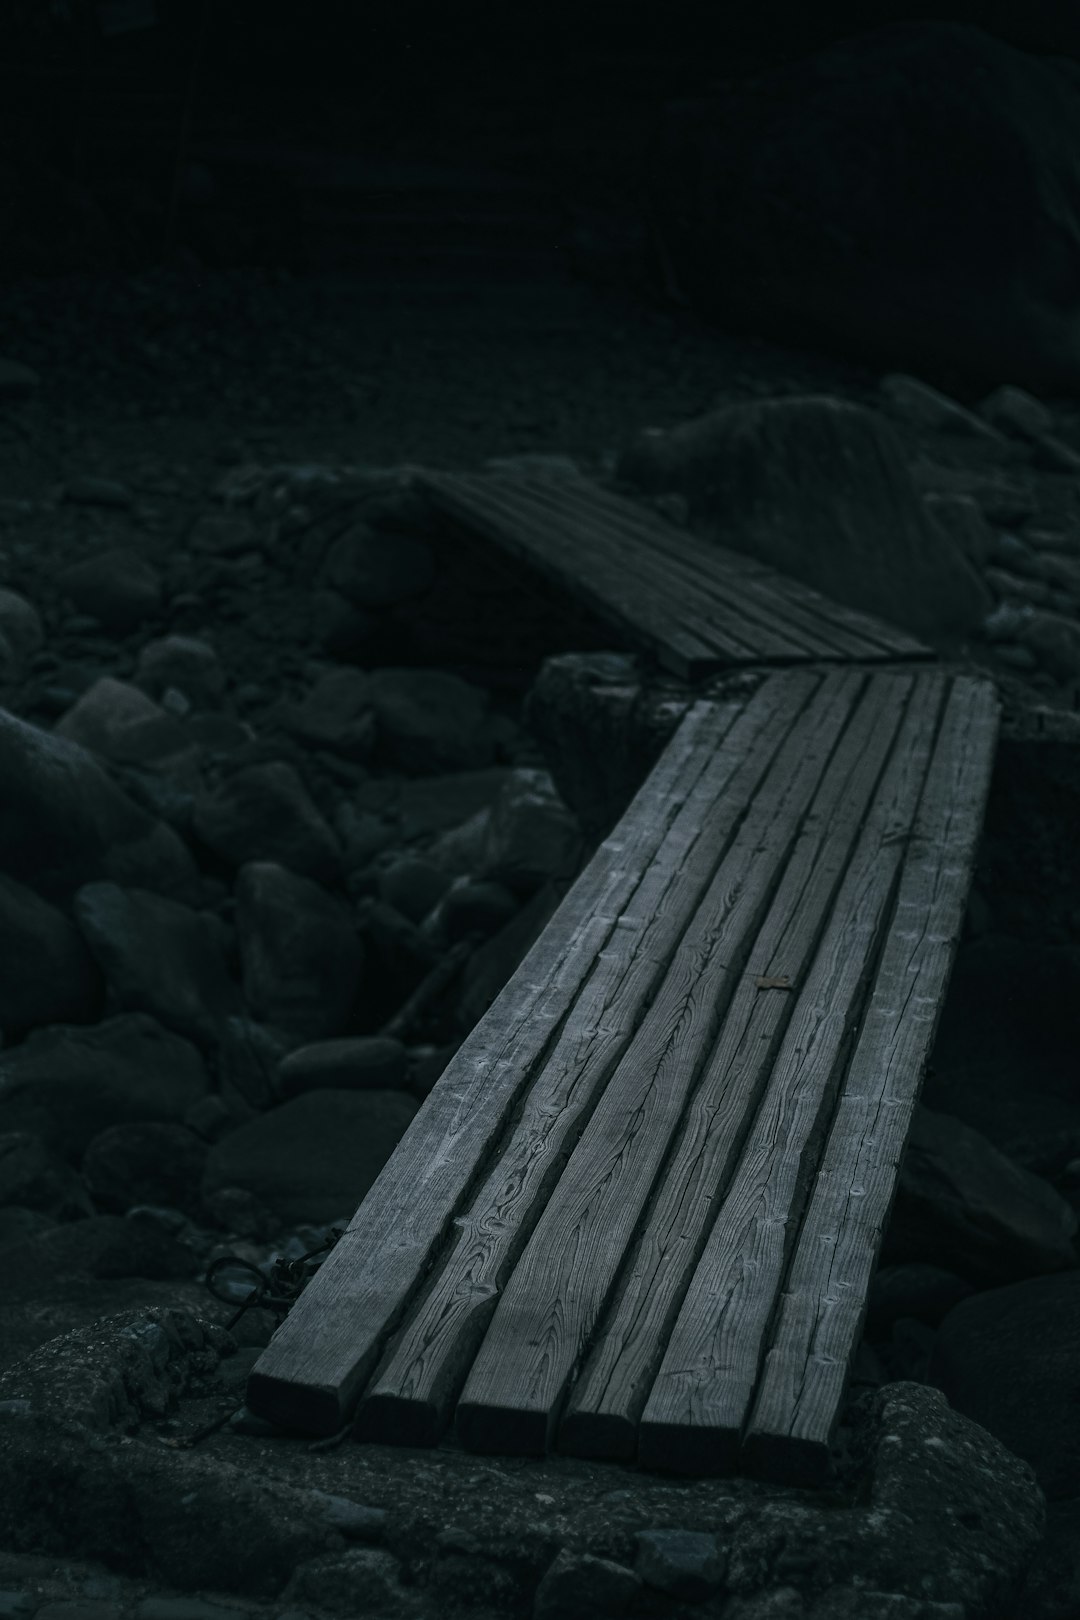 brown wooden bench on rocky ground